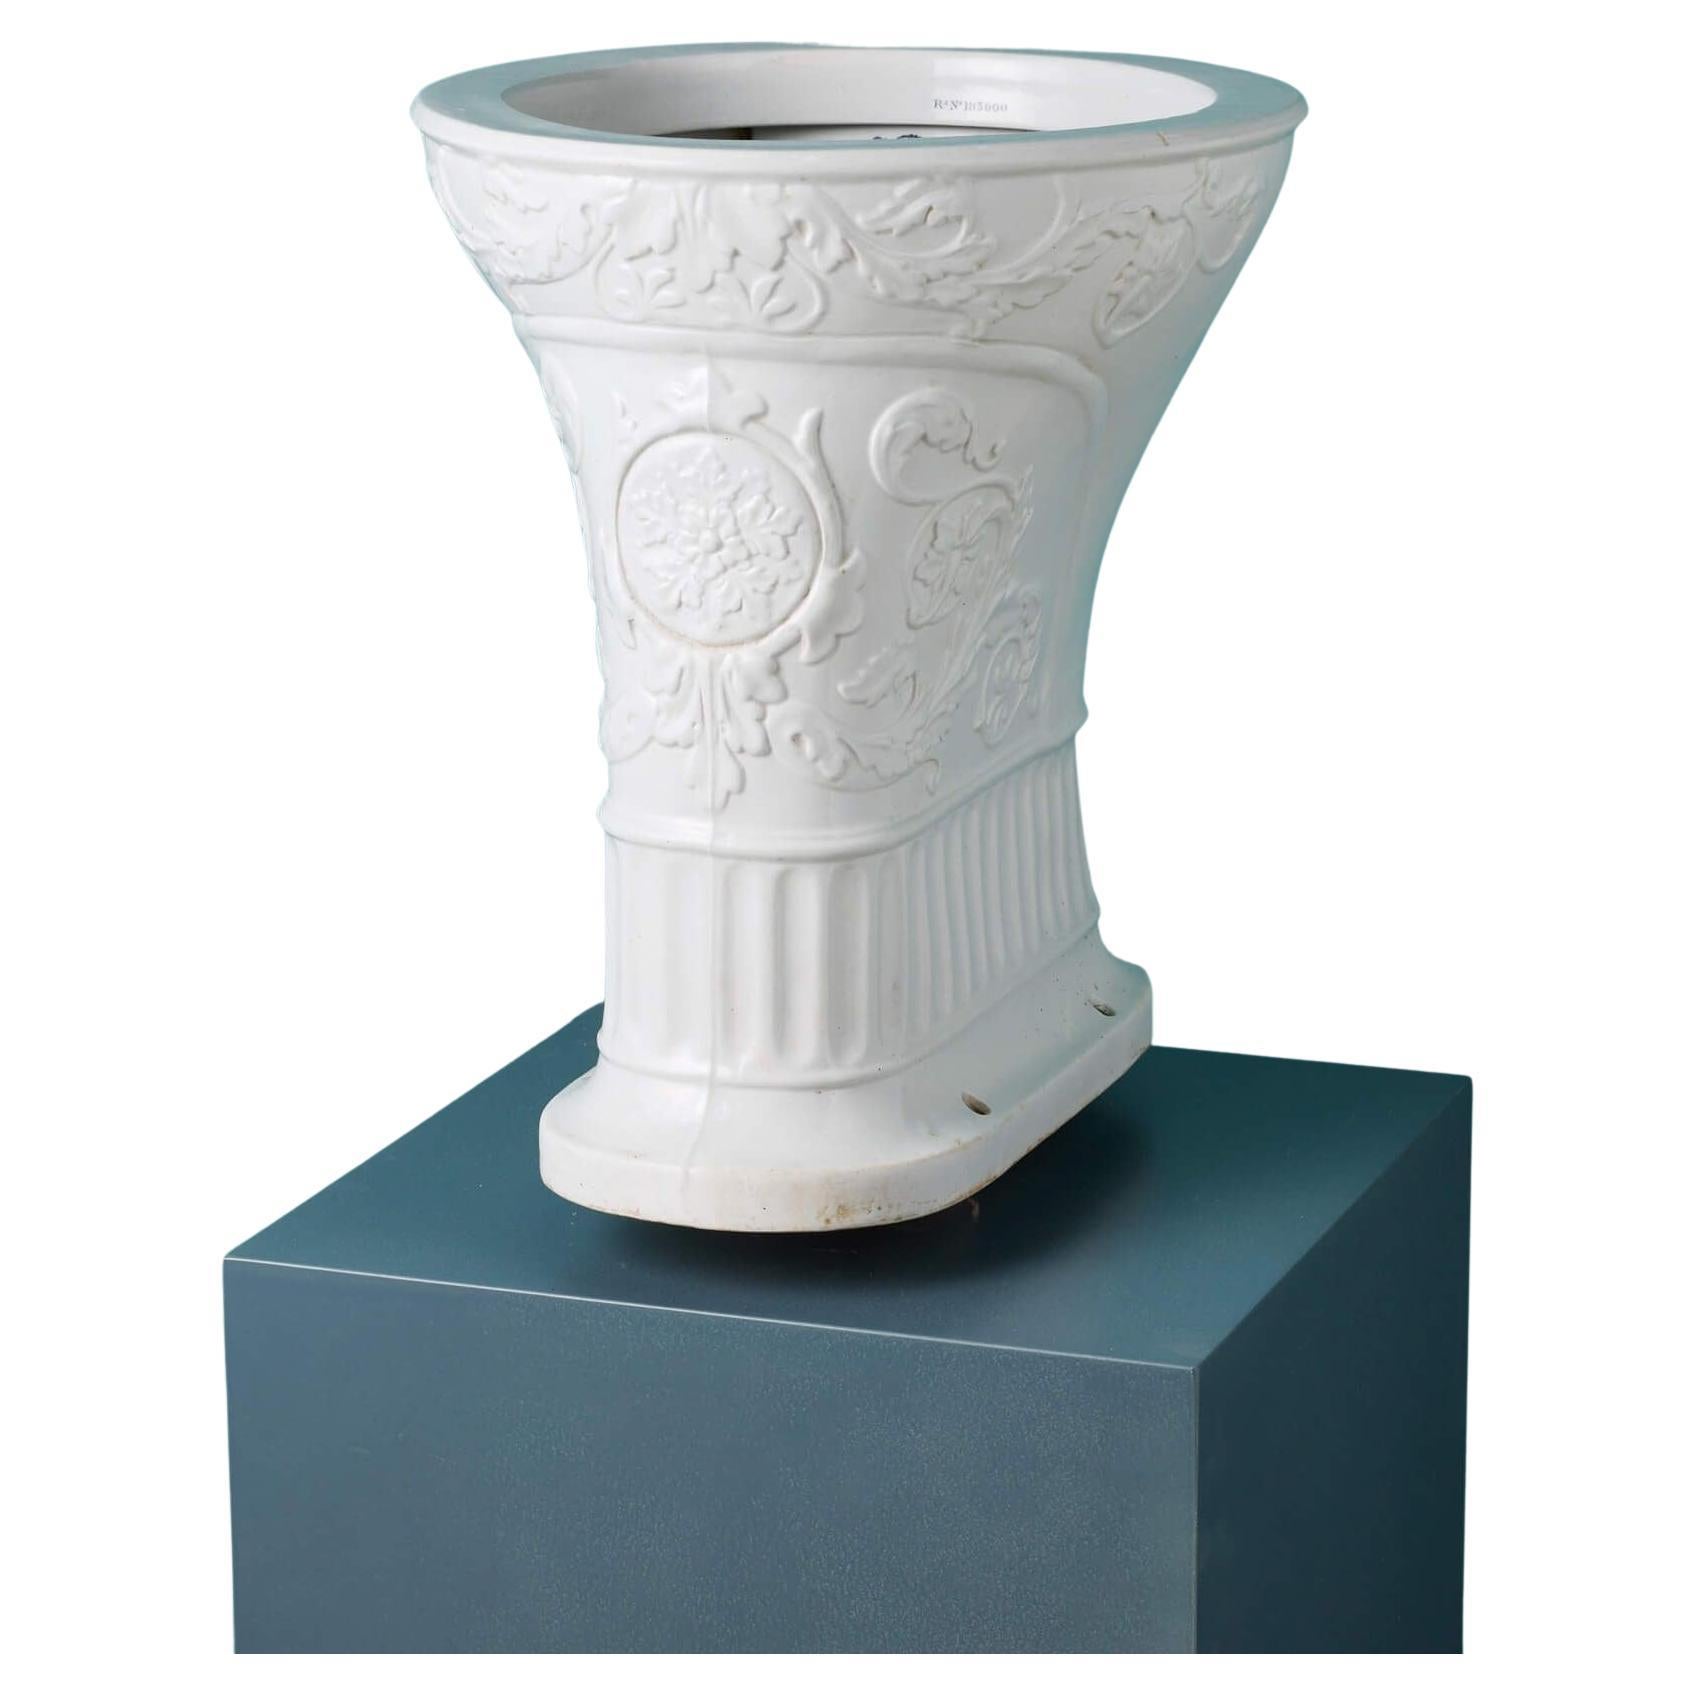 Glazed White Porcelain Embossed Antique ‘Severn’ Toilet or WC